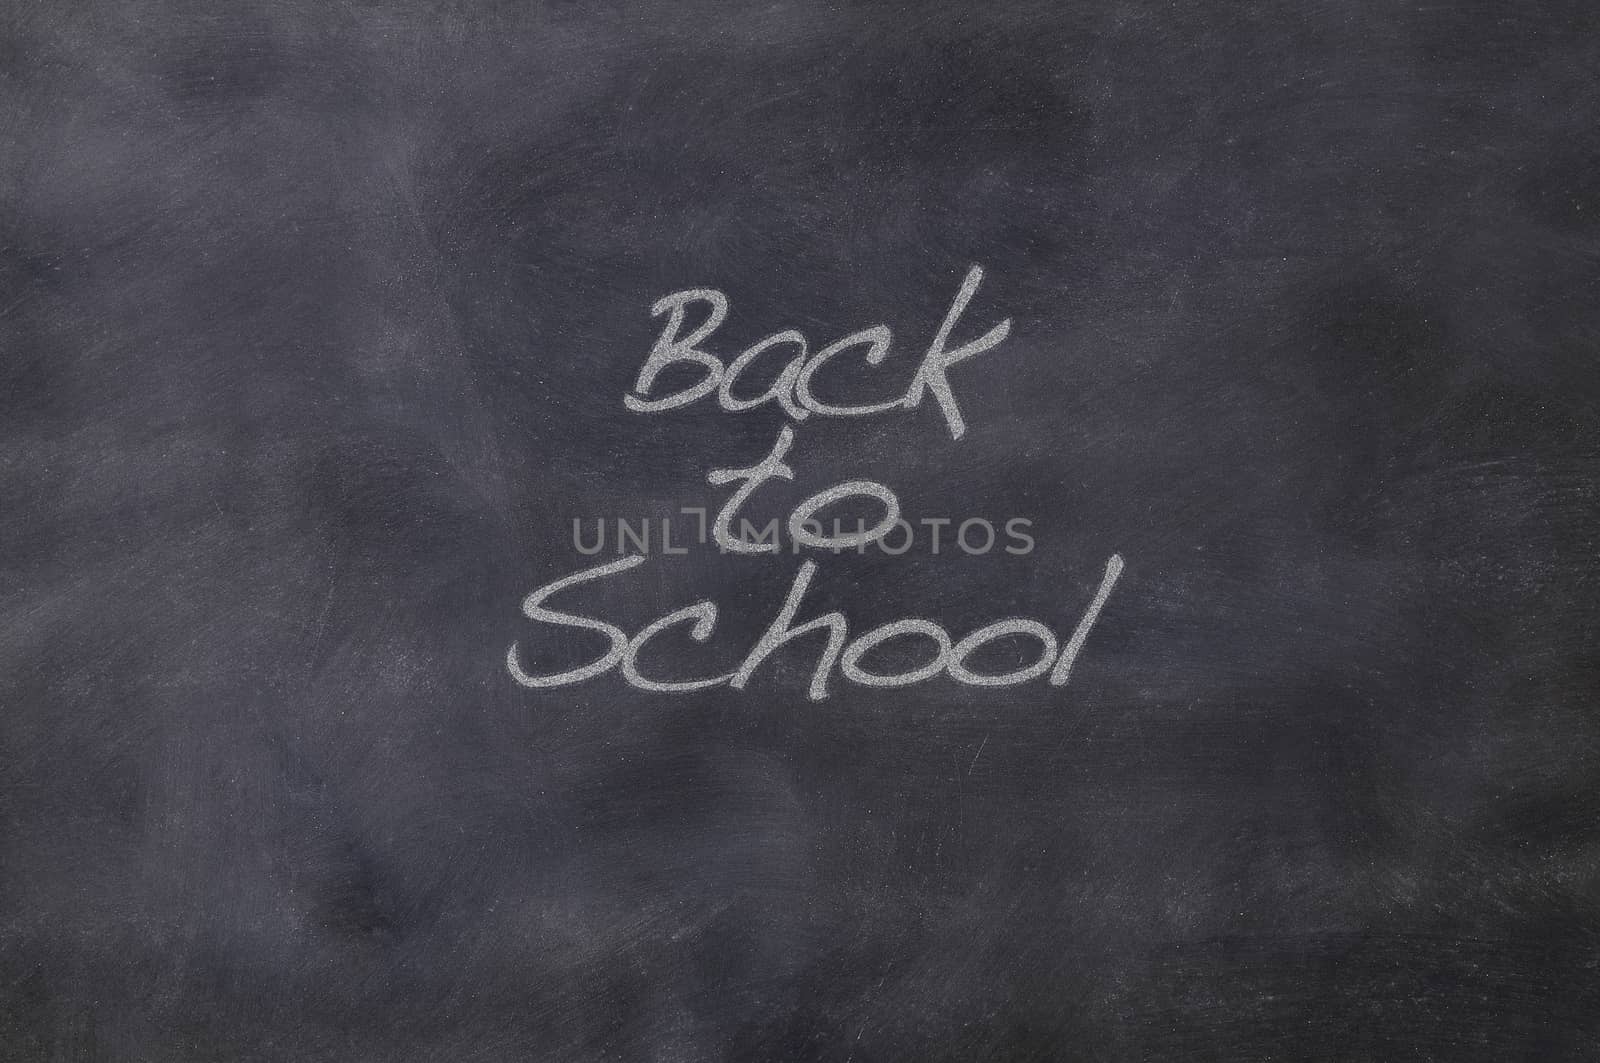 Blackboard school. by CreativePhotoSpain